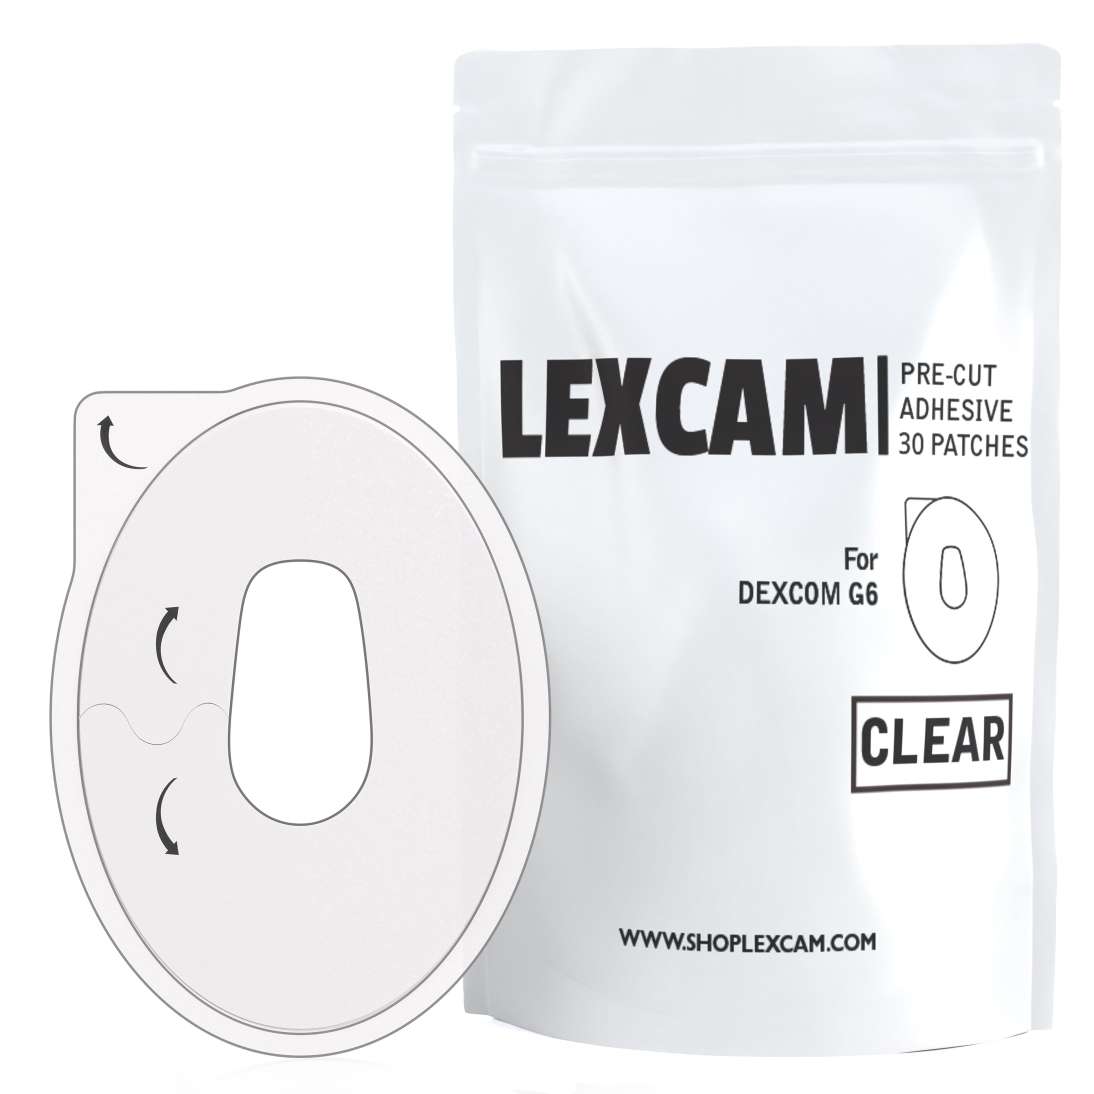 Glucomart Premium Dexcom G6 Patches and Dexcom G6 Stickers Cars Dexcom  3-Pack